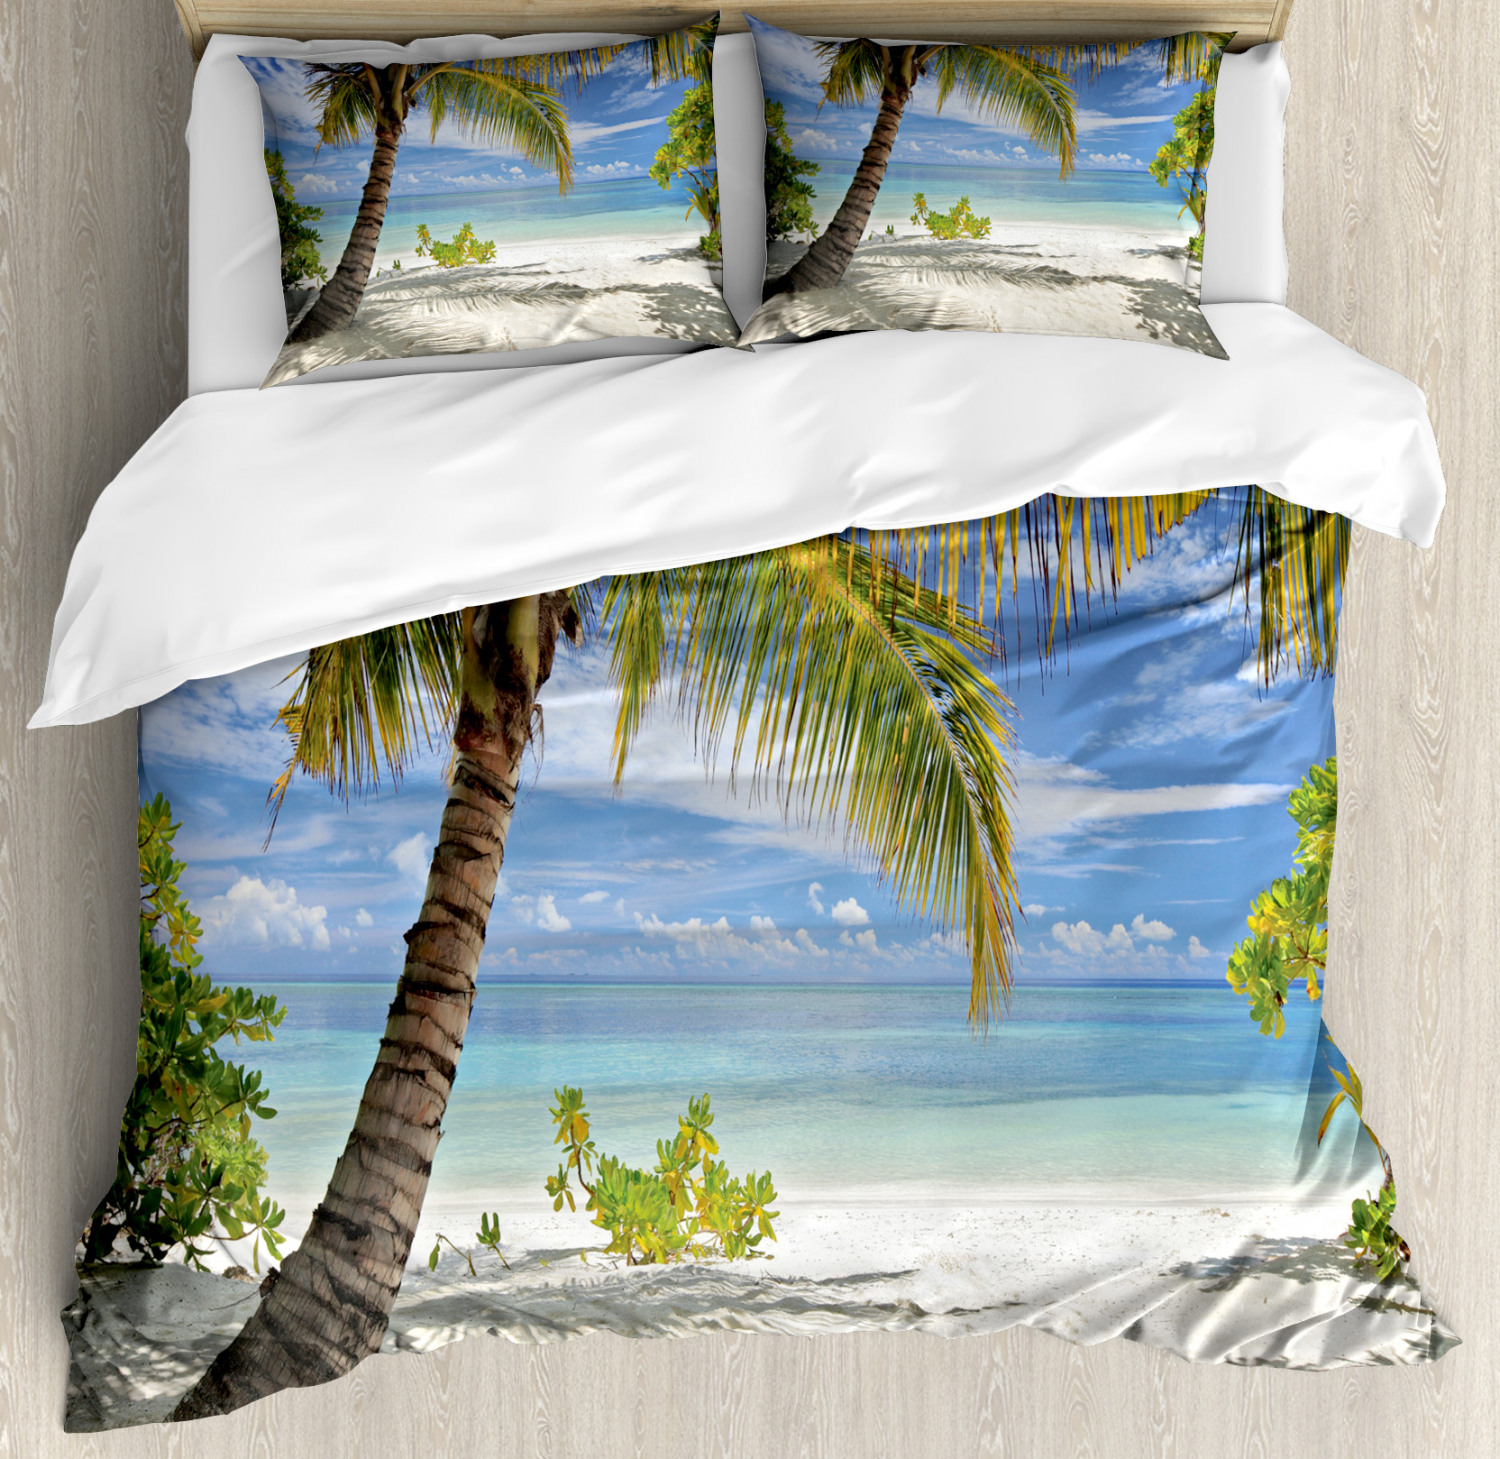 Tropical Duvet Cover Set With Pillow Shams Palm Trees Coastline